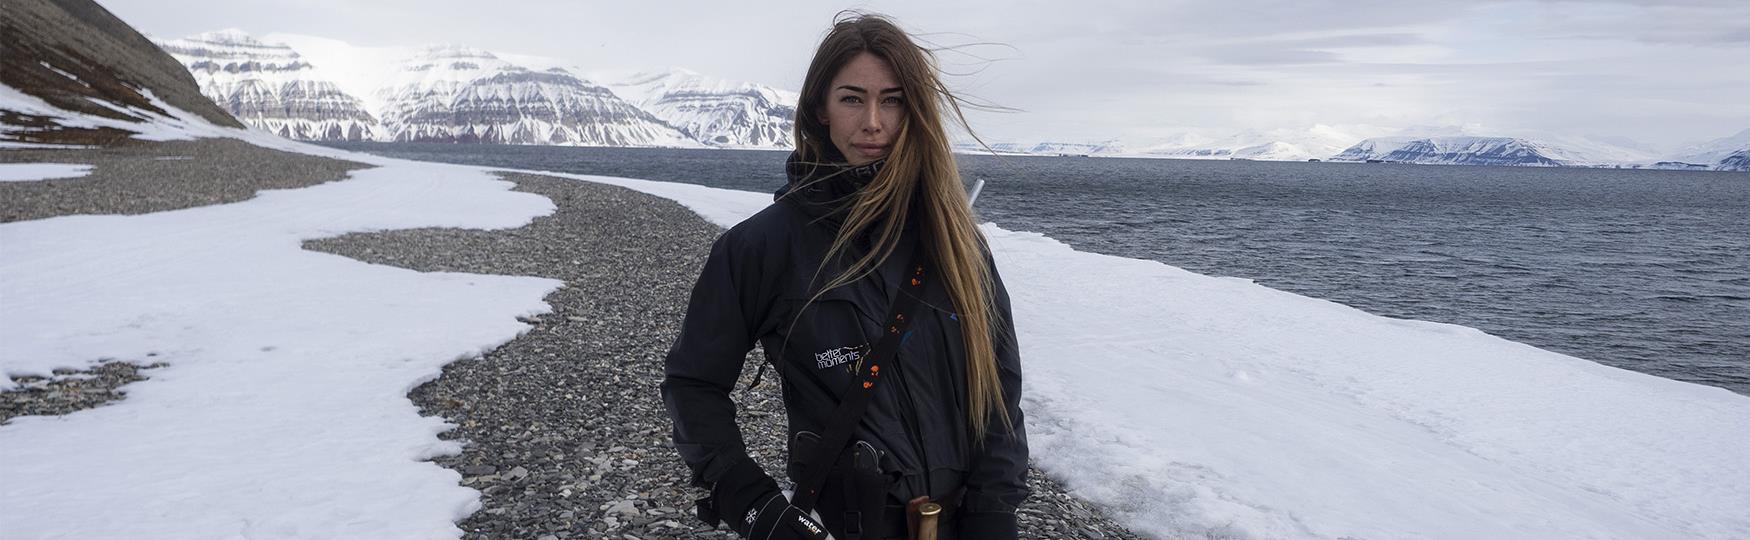 Meet the Svalbard guide